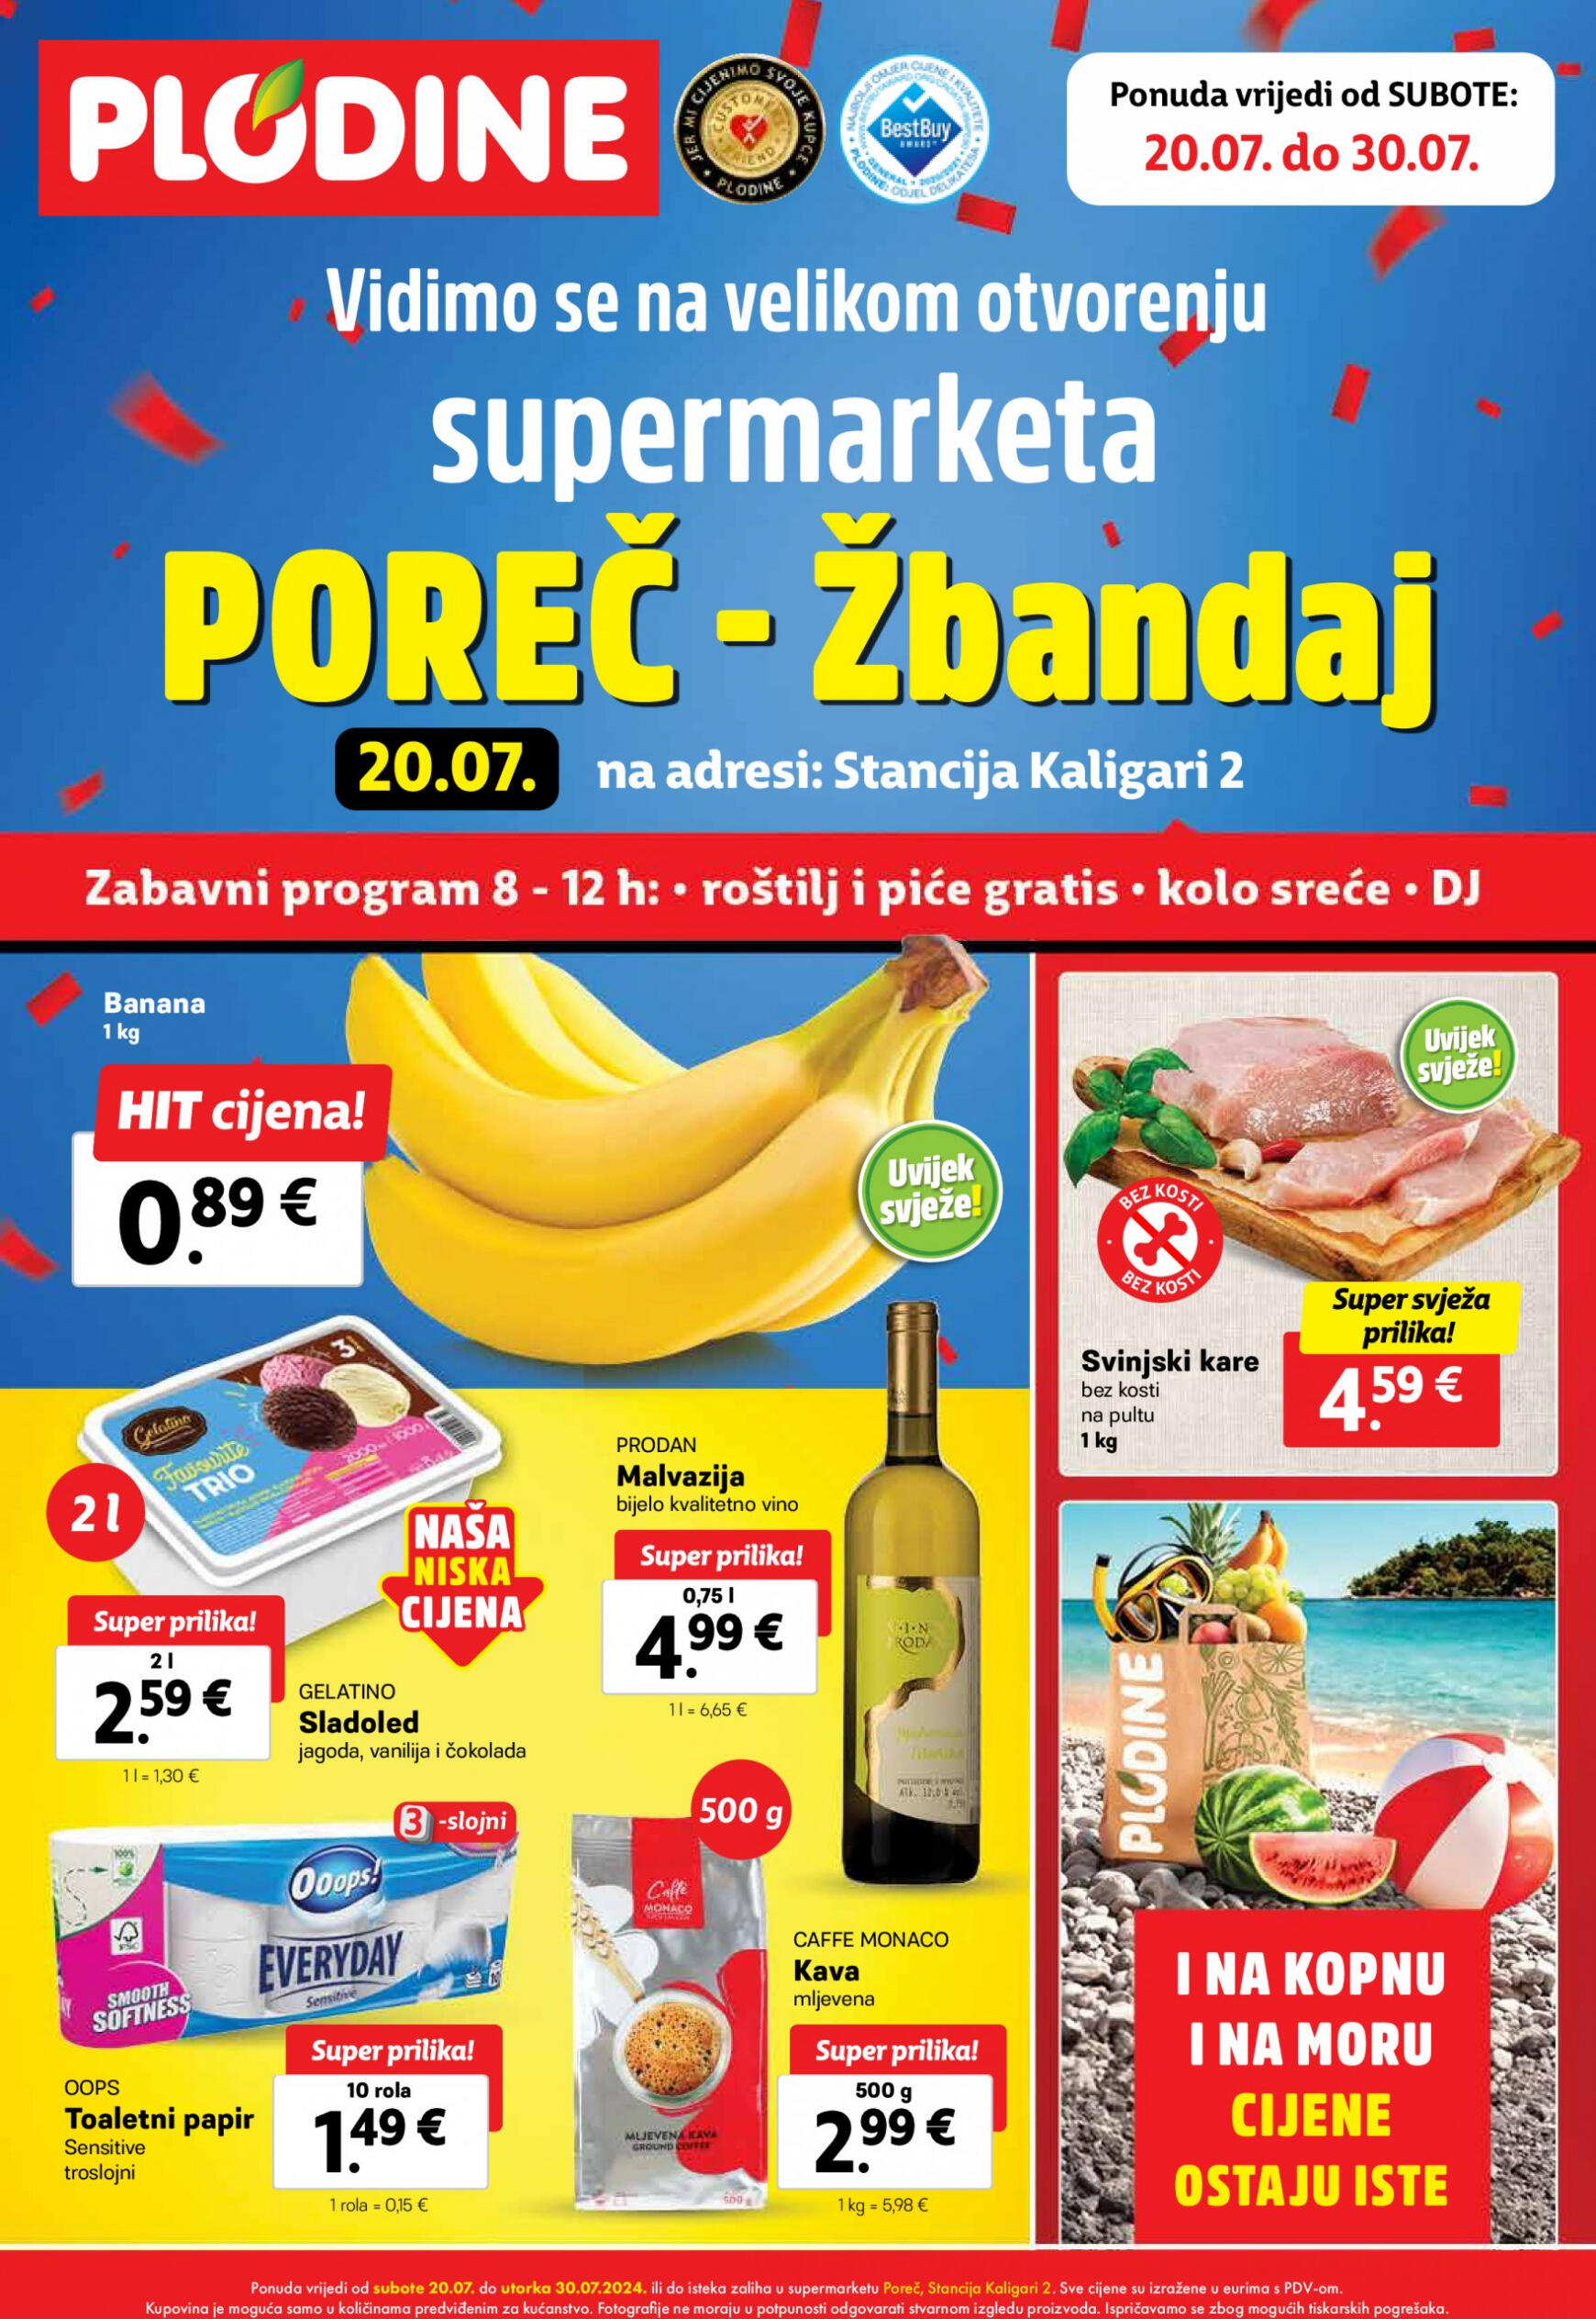 plodine - Novi katalog Plodine - otvorenje Poreč-Žbandaj 20.07. - 30.07.